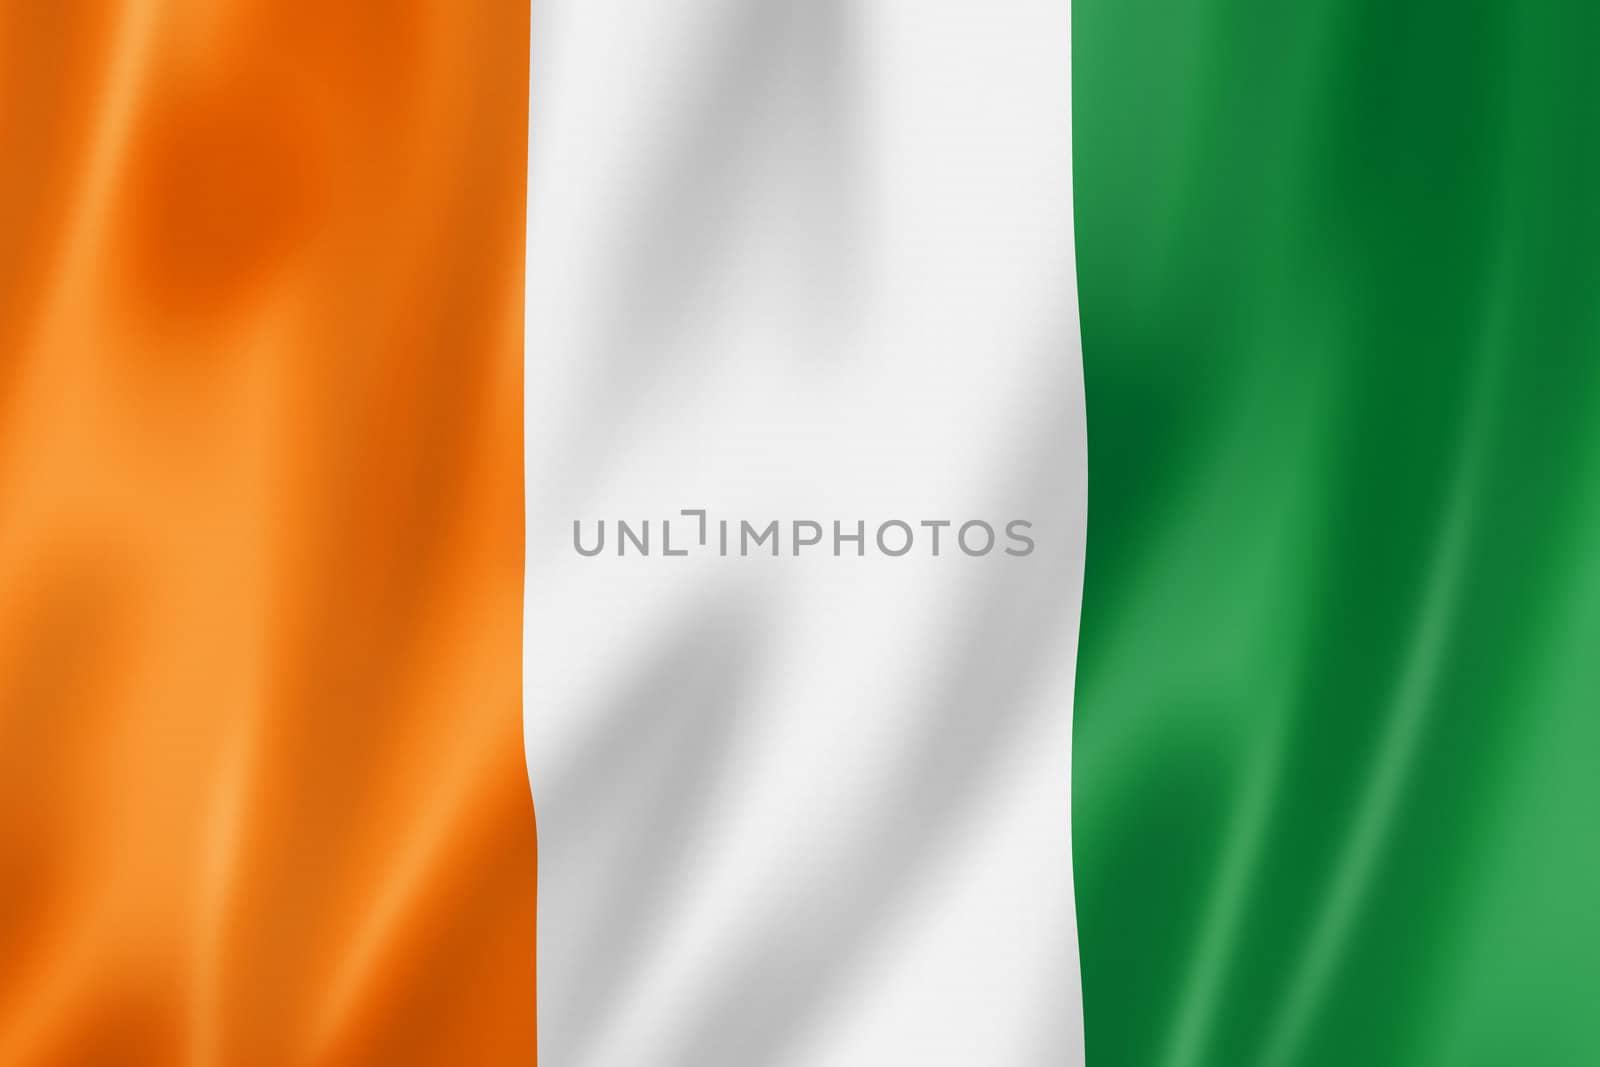 Ivorian flag by daboost